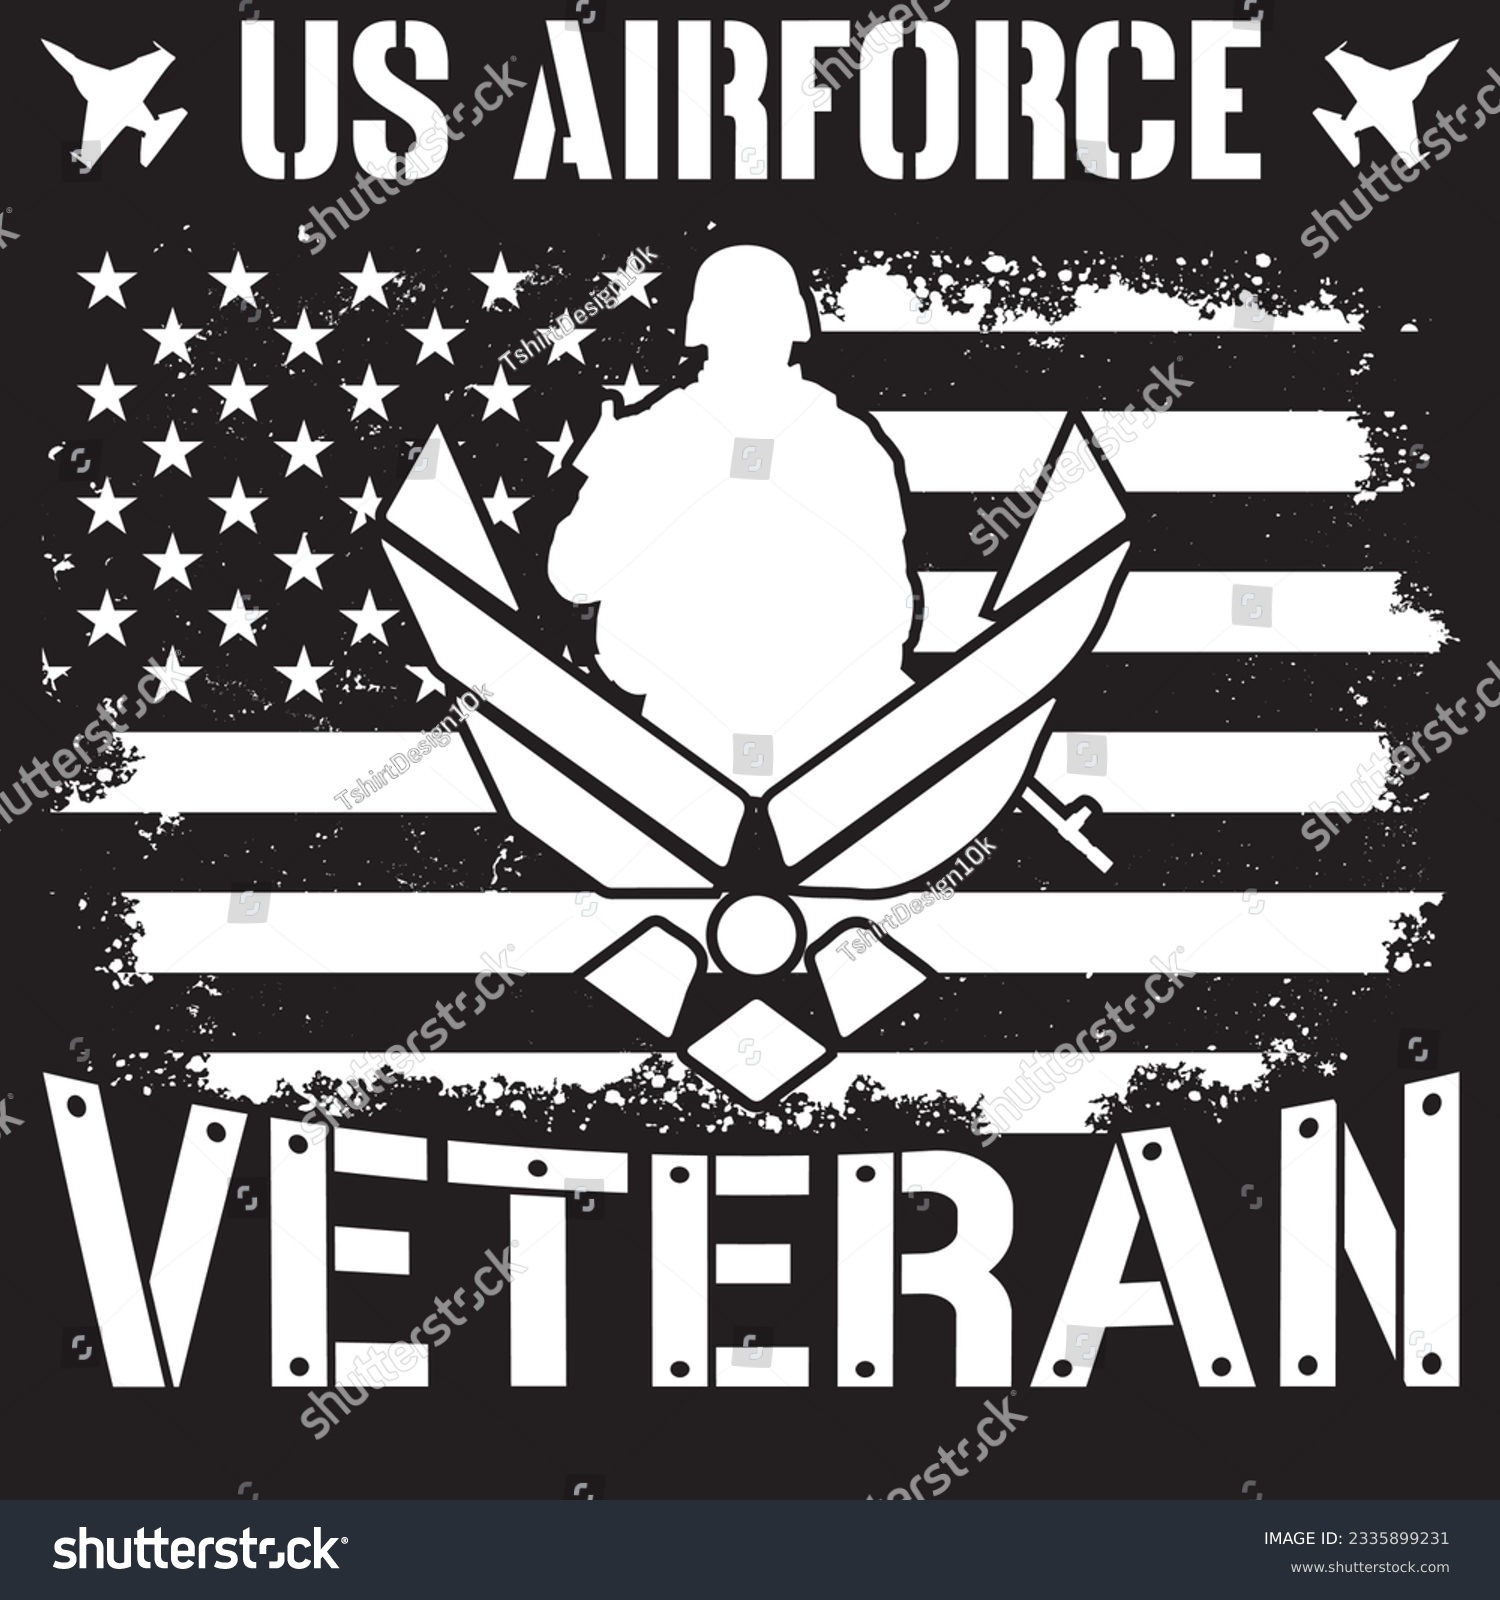 SVG of US Air force veteran army  svg